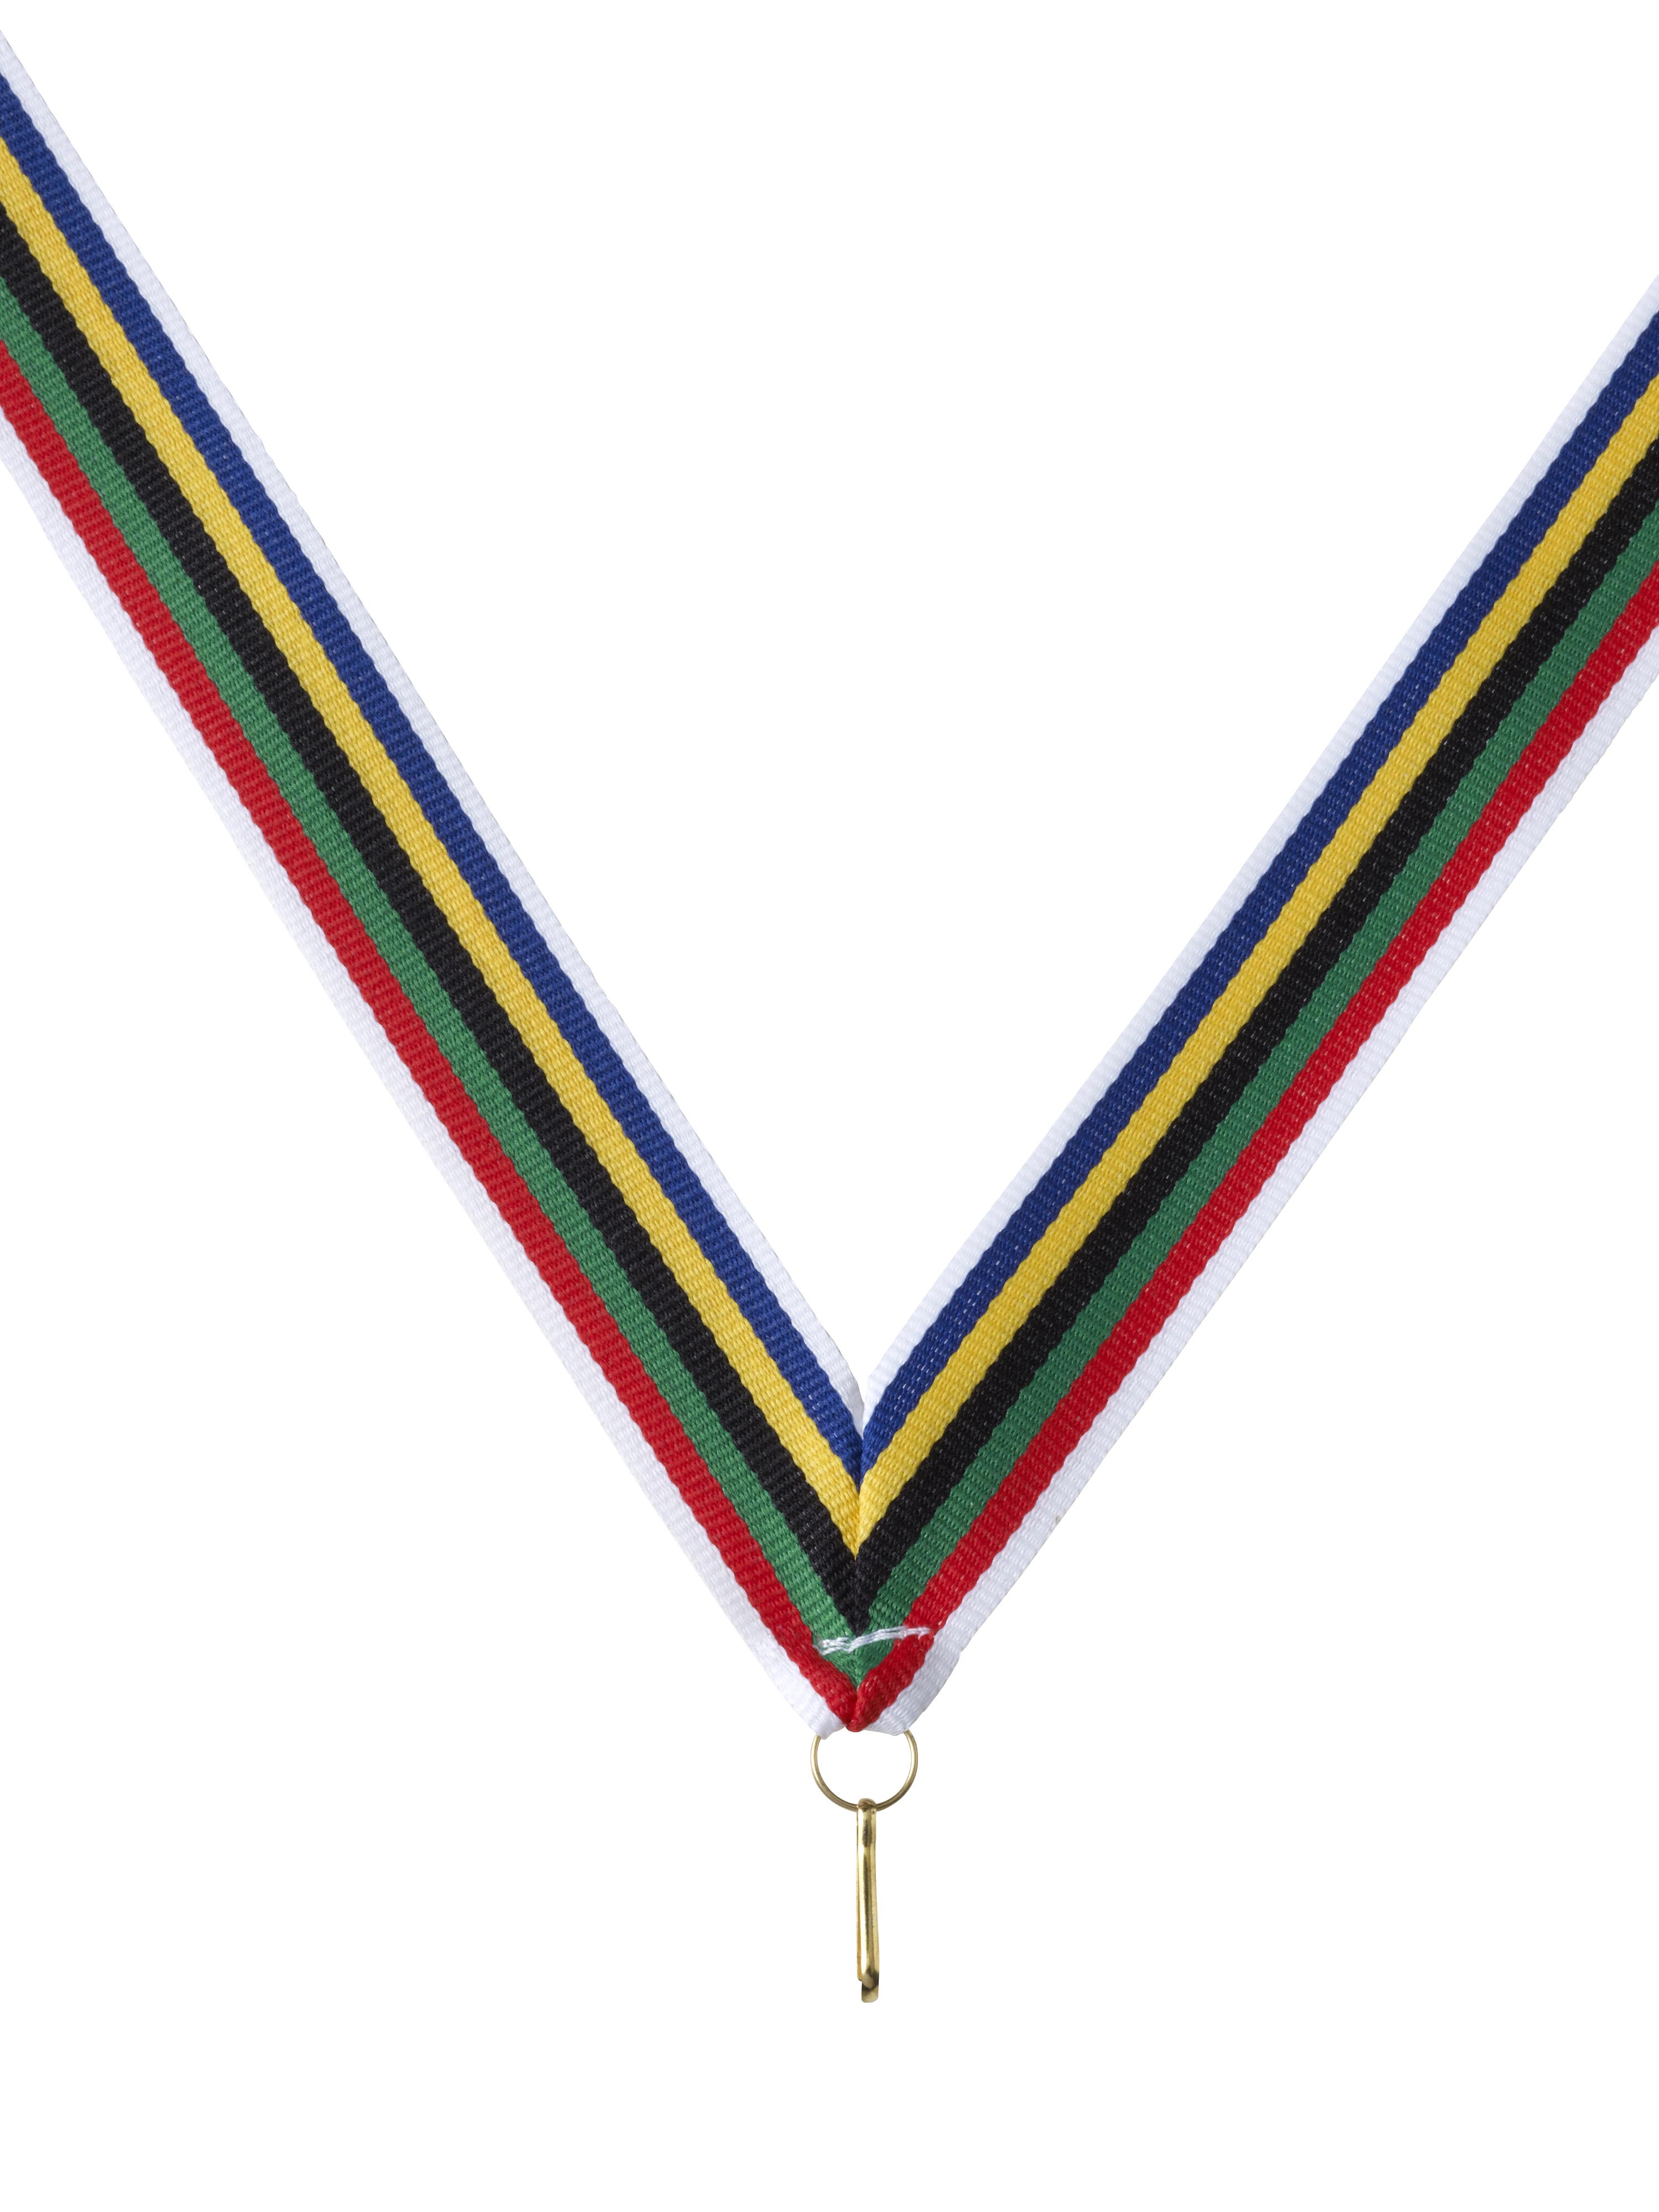 Medaillenband Olympia